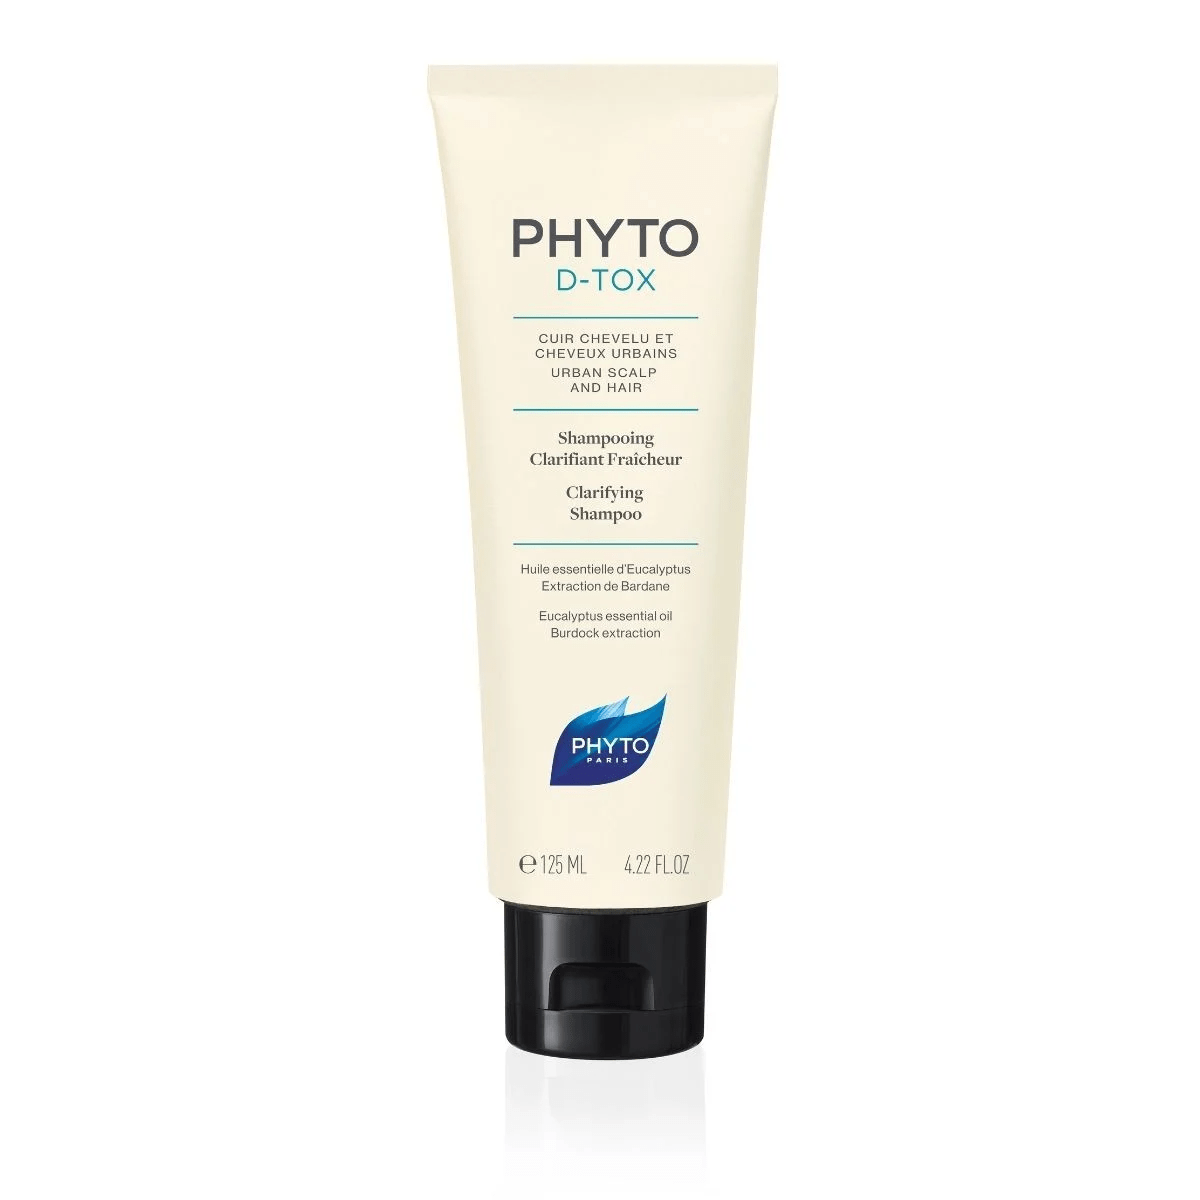 PHYTO Soins & Beauté PhytoD-tox (shampoing clarifiant shampoing) 125ml